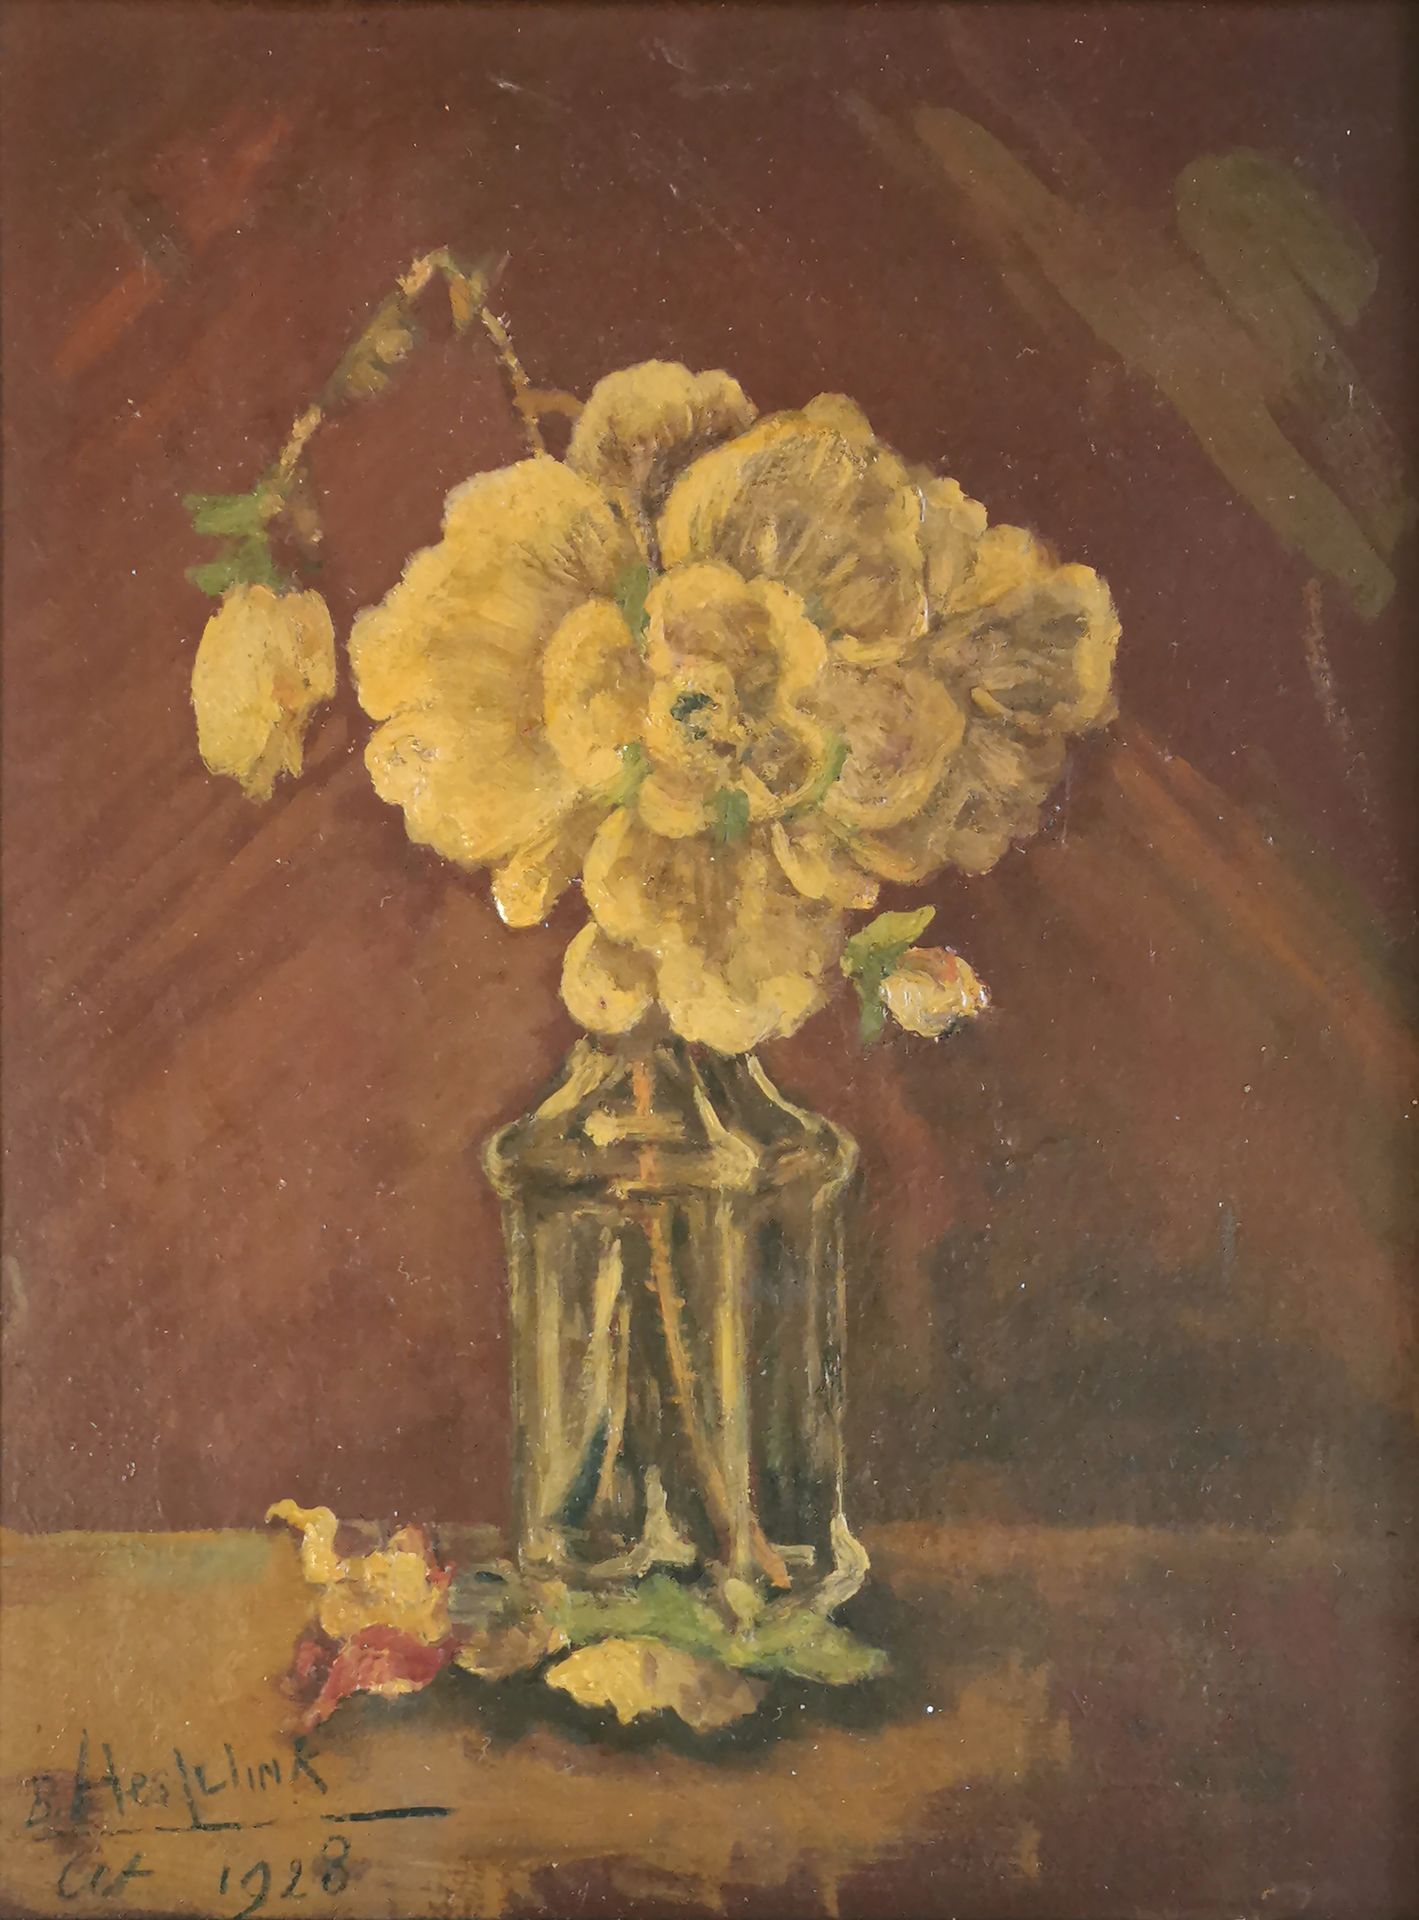 Null B.HESLUINK(20世纪学校)

花，1928年

板上油画，签名和日期为 "1928年10月"。

34.5 x 27 cm

有框